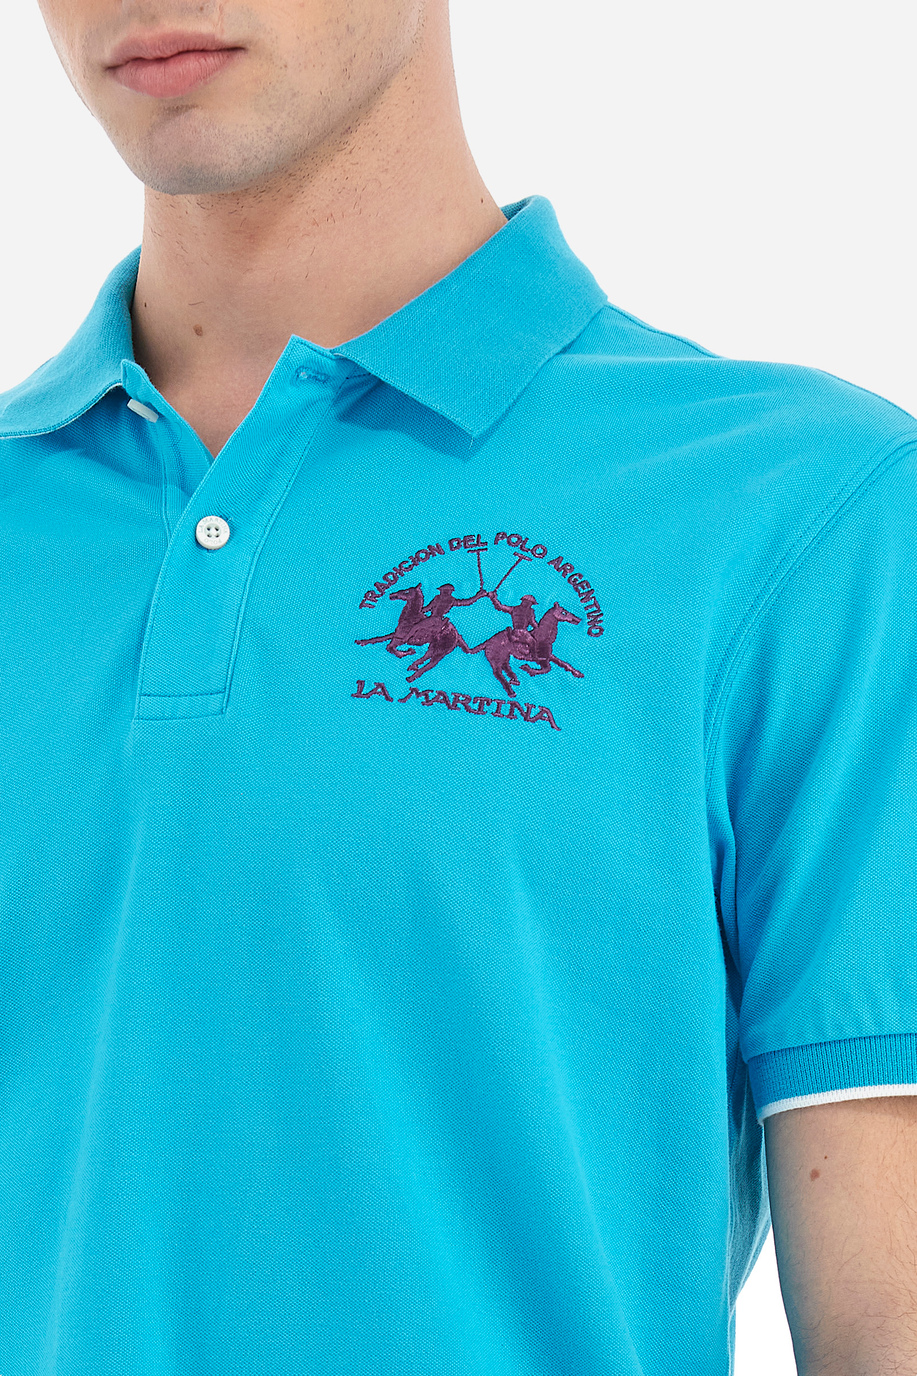 Herren-Kurzarm-Poloshirt aus Stretch-Baumwolle mit normaler Passform - Miguel - Poloshirts | La Martina - Official Online Shop